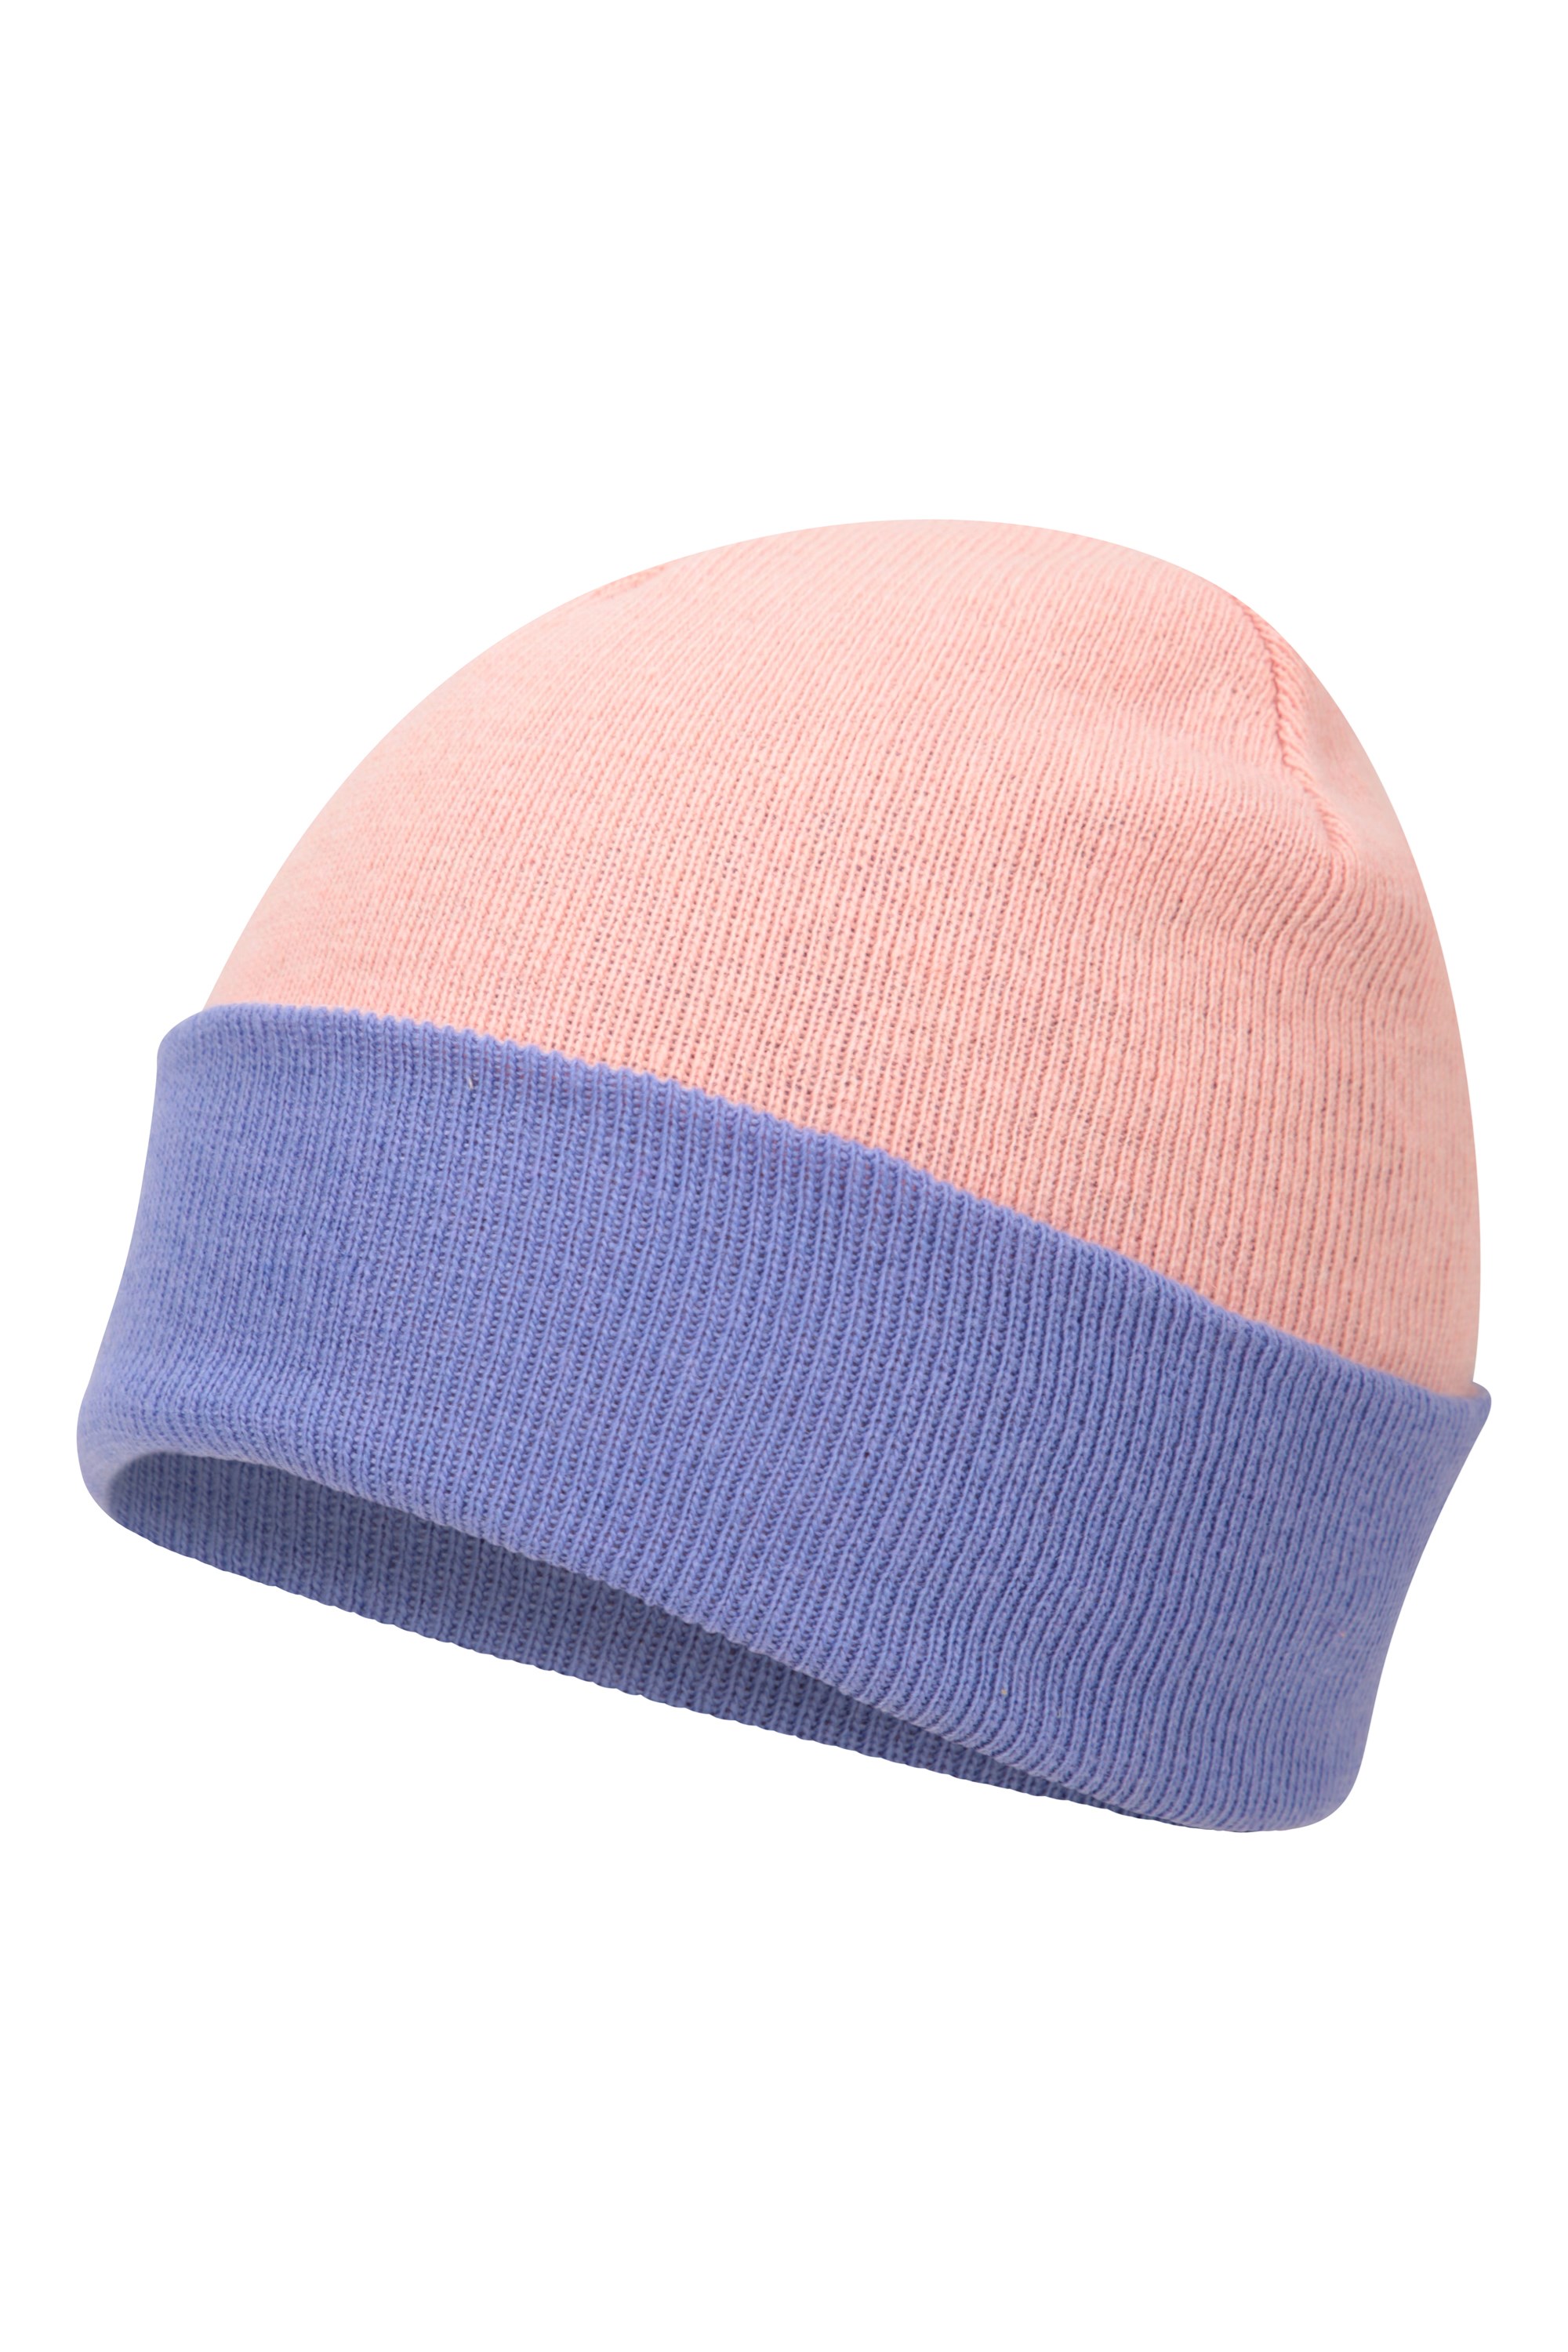 Fleece Beanie Hats Great for Walk/Run/Ski Lots of Colors Fully Reversible 